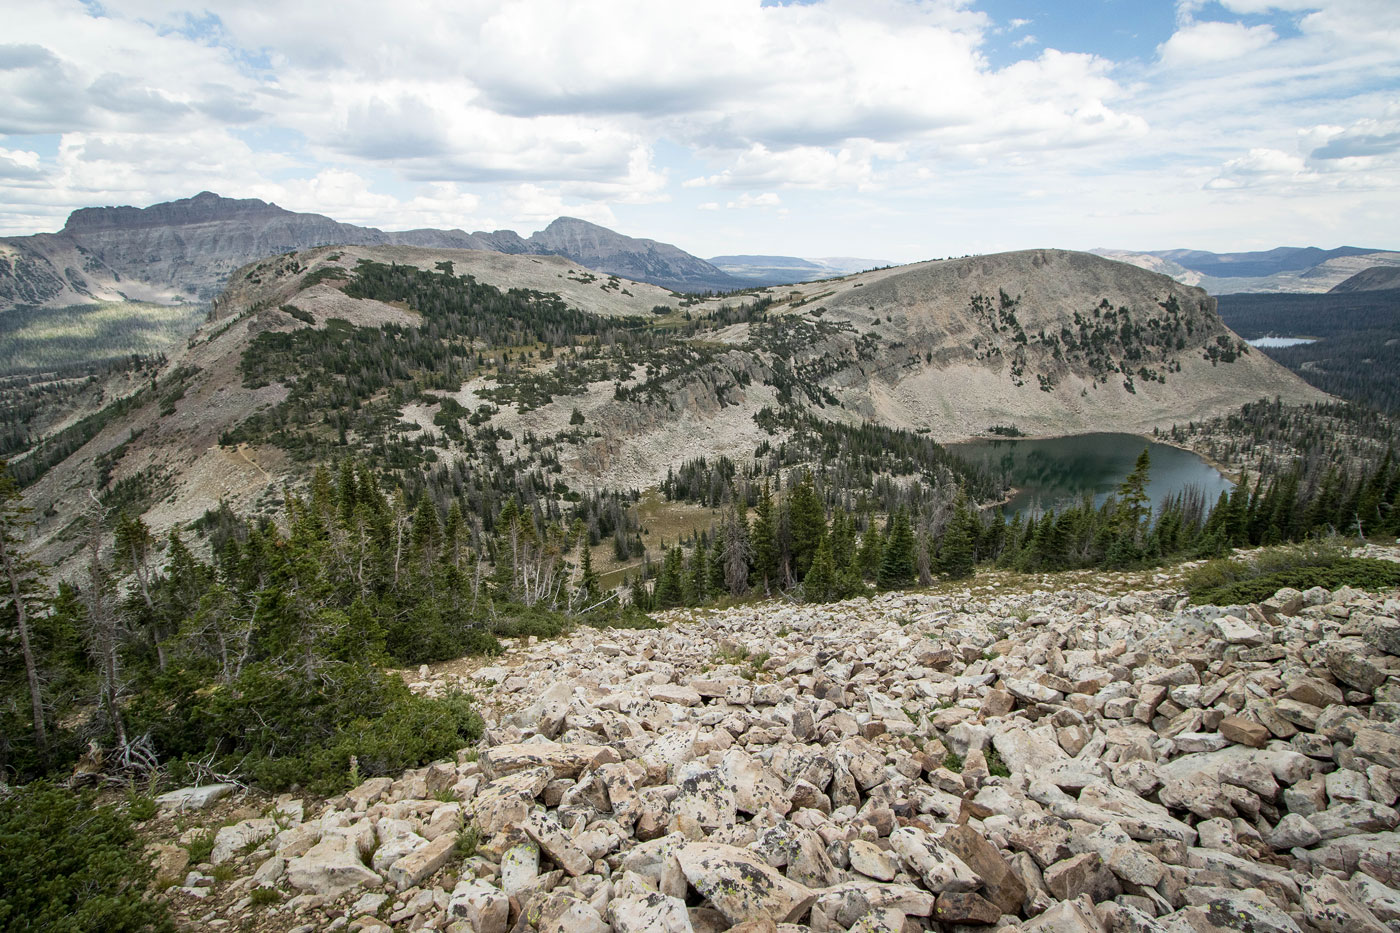 Hike Mount Marsell via Lofty Lake Loop in Uinta-Wasatch-Cache National Forest, Utah - Stav is Lost